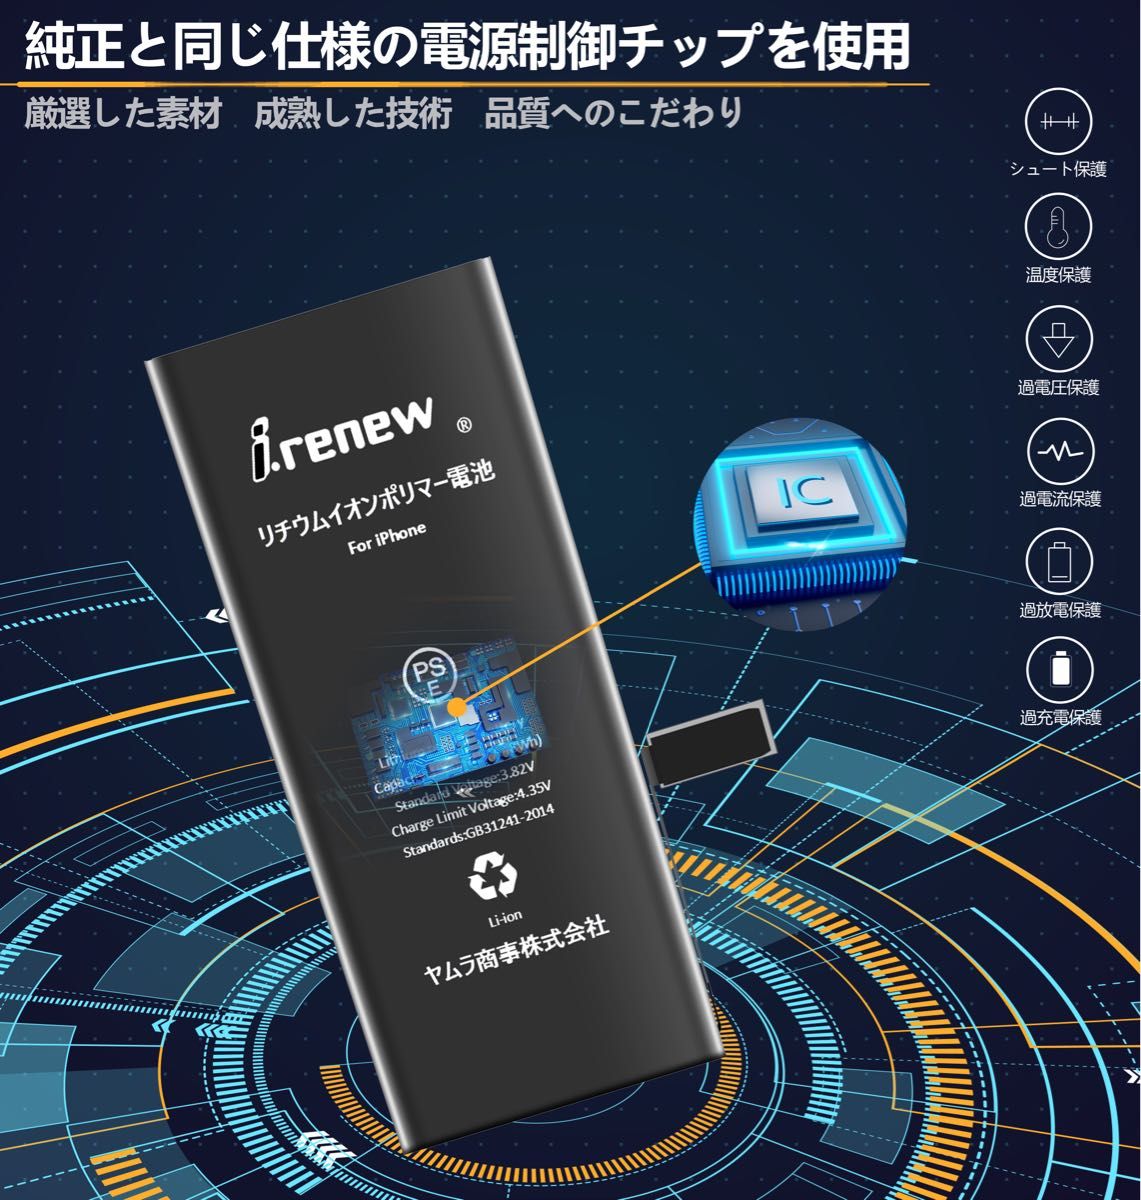 【新品】iPhoneXR バッテリー 交換用 PSE認証済 工具・保証付